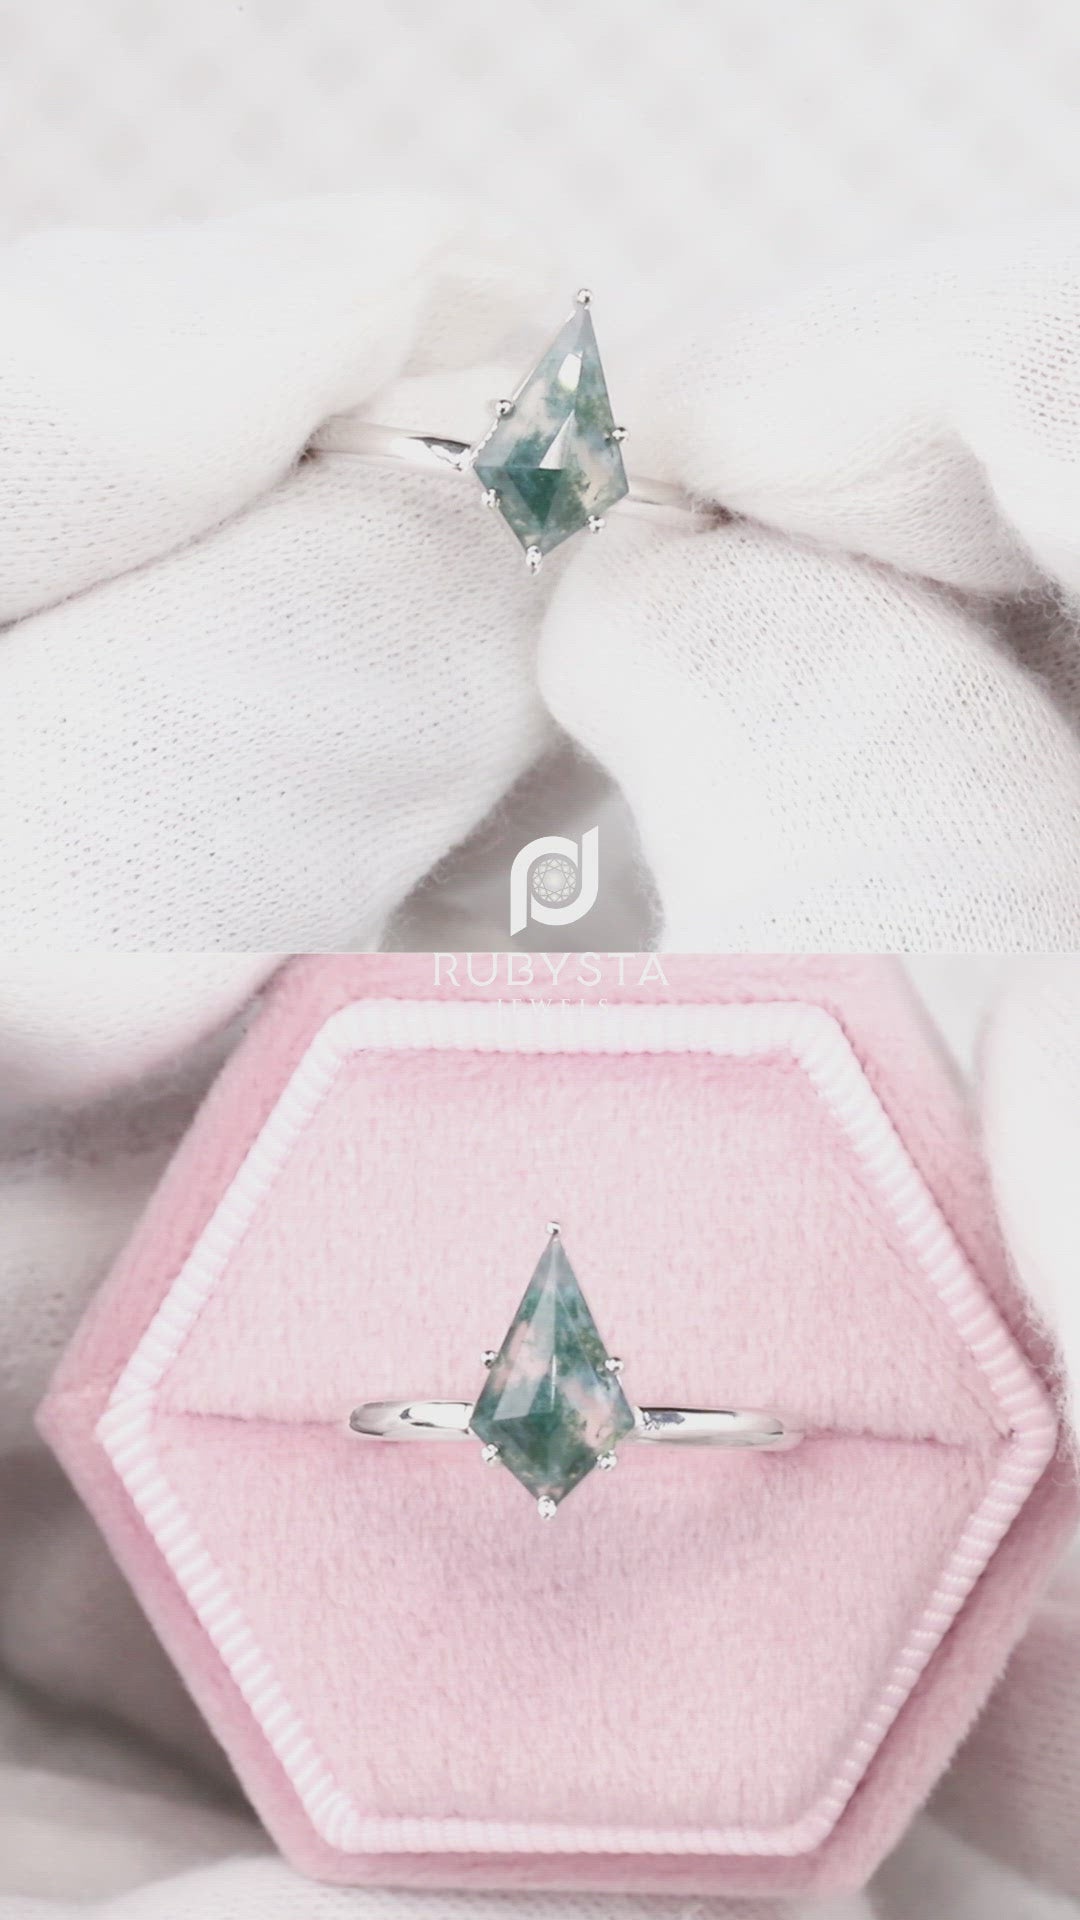 Moss Agate Ring | Kite Diamond Ring | kite Engagement Ring